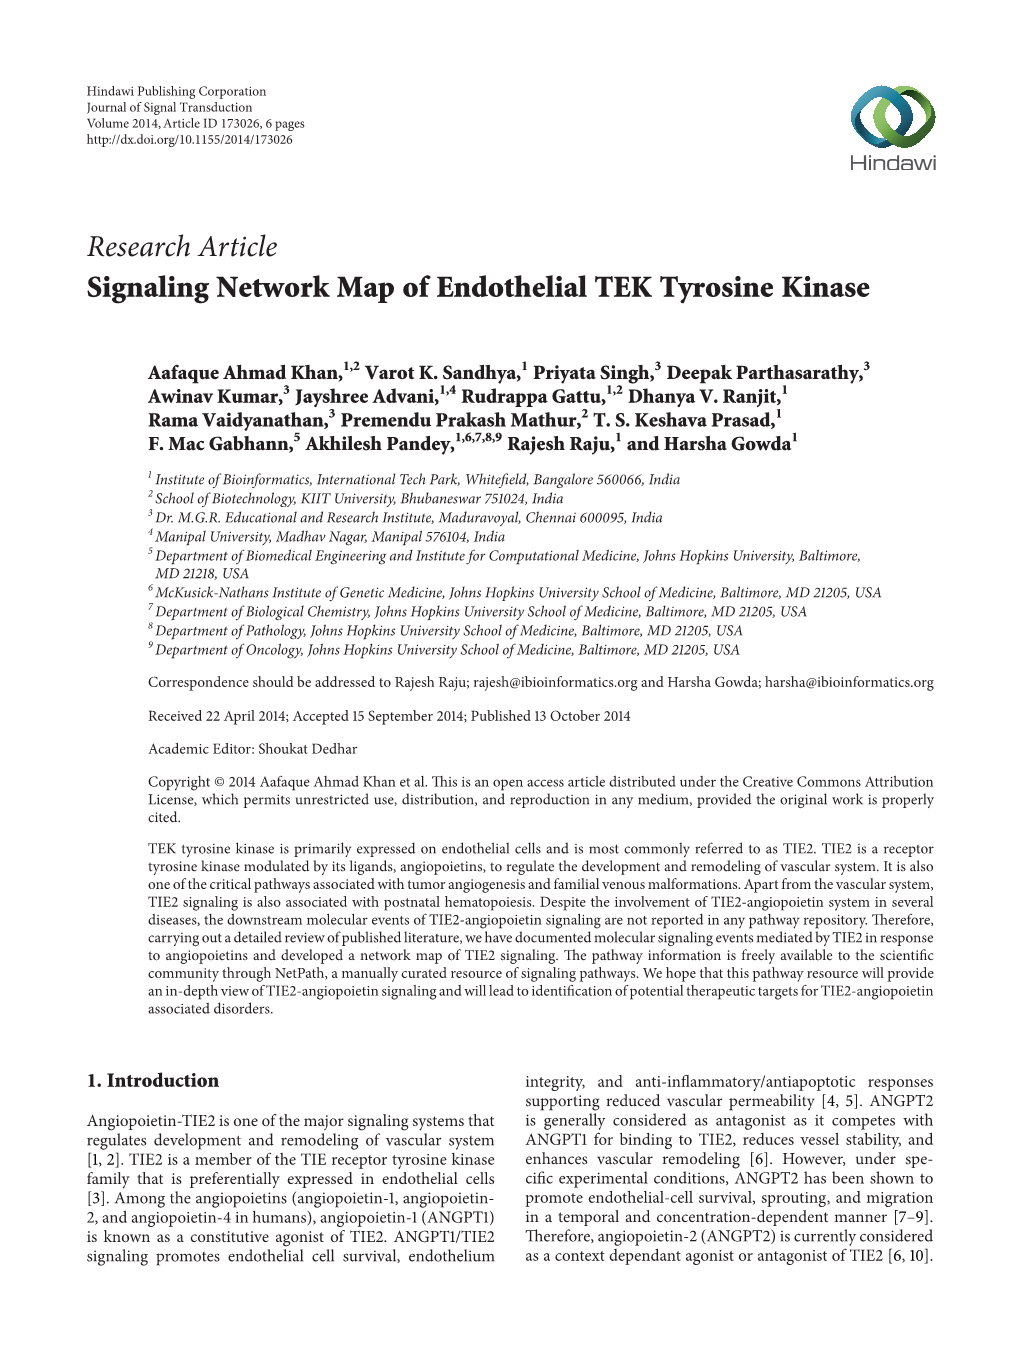 Signaling Network Map of Endothelial TEK Tyrosine Kinase